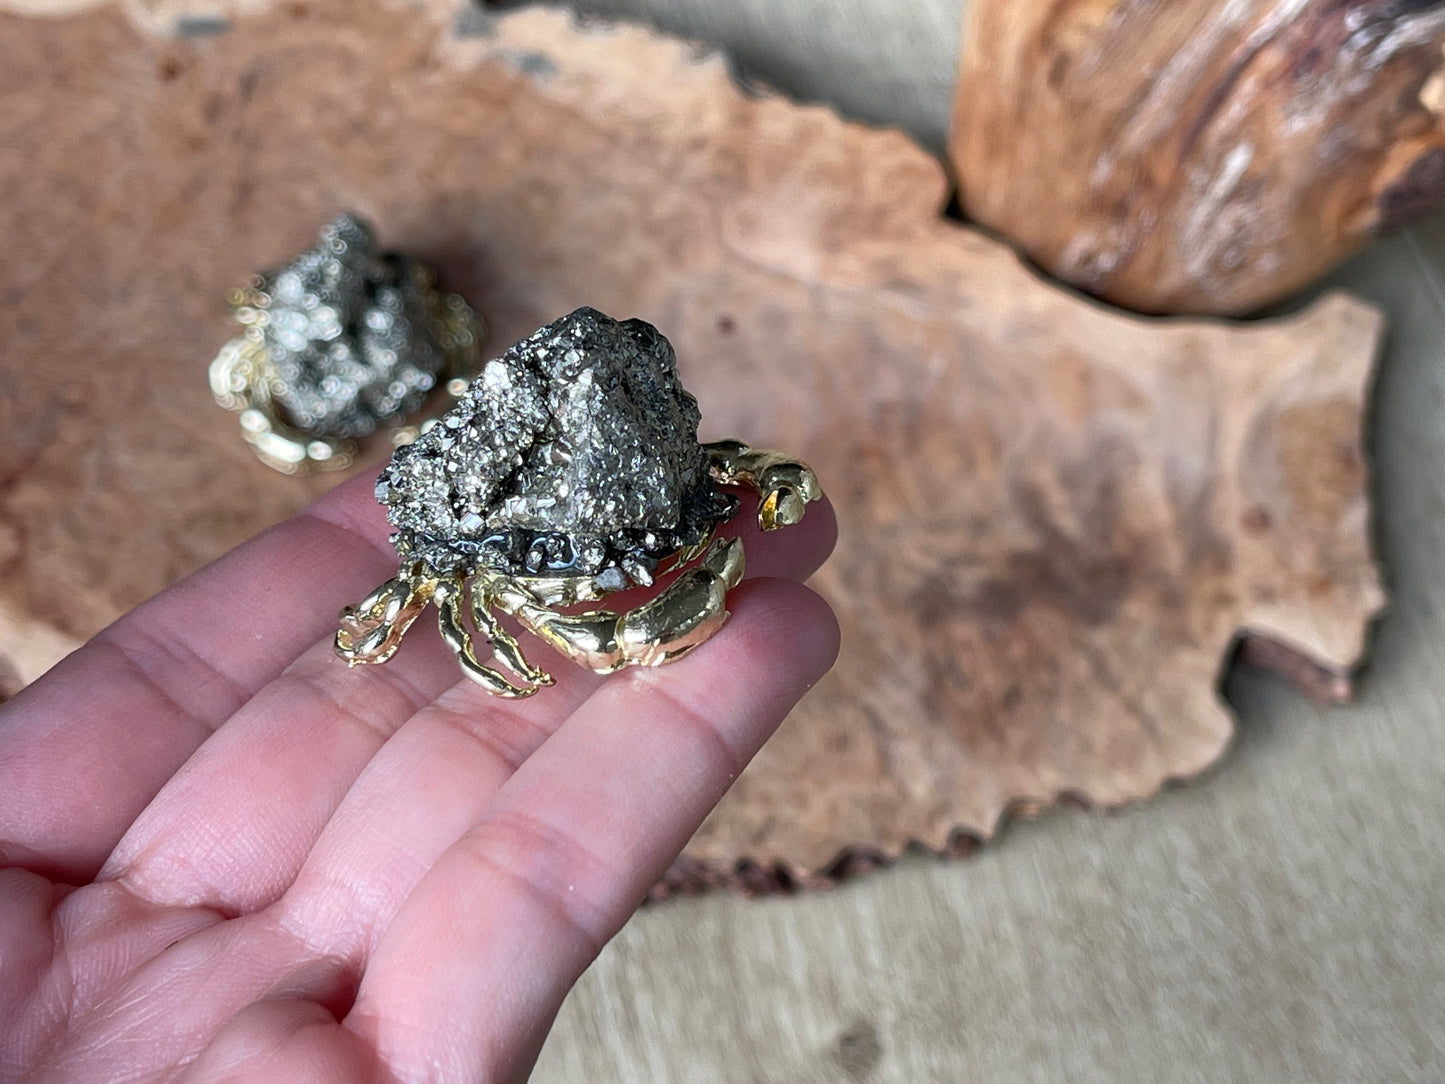 Pyrite crabs